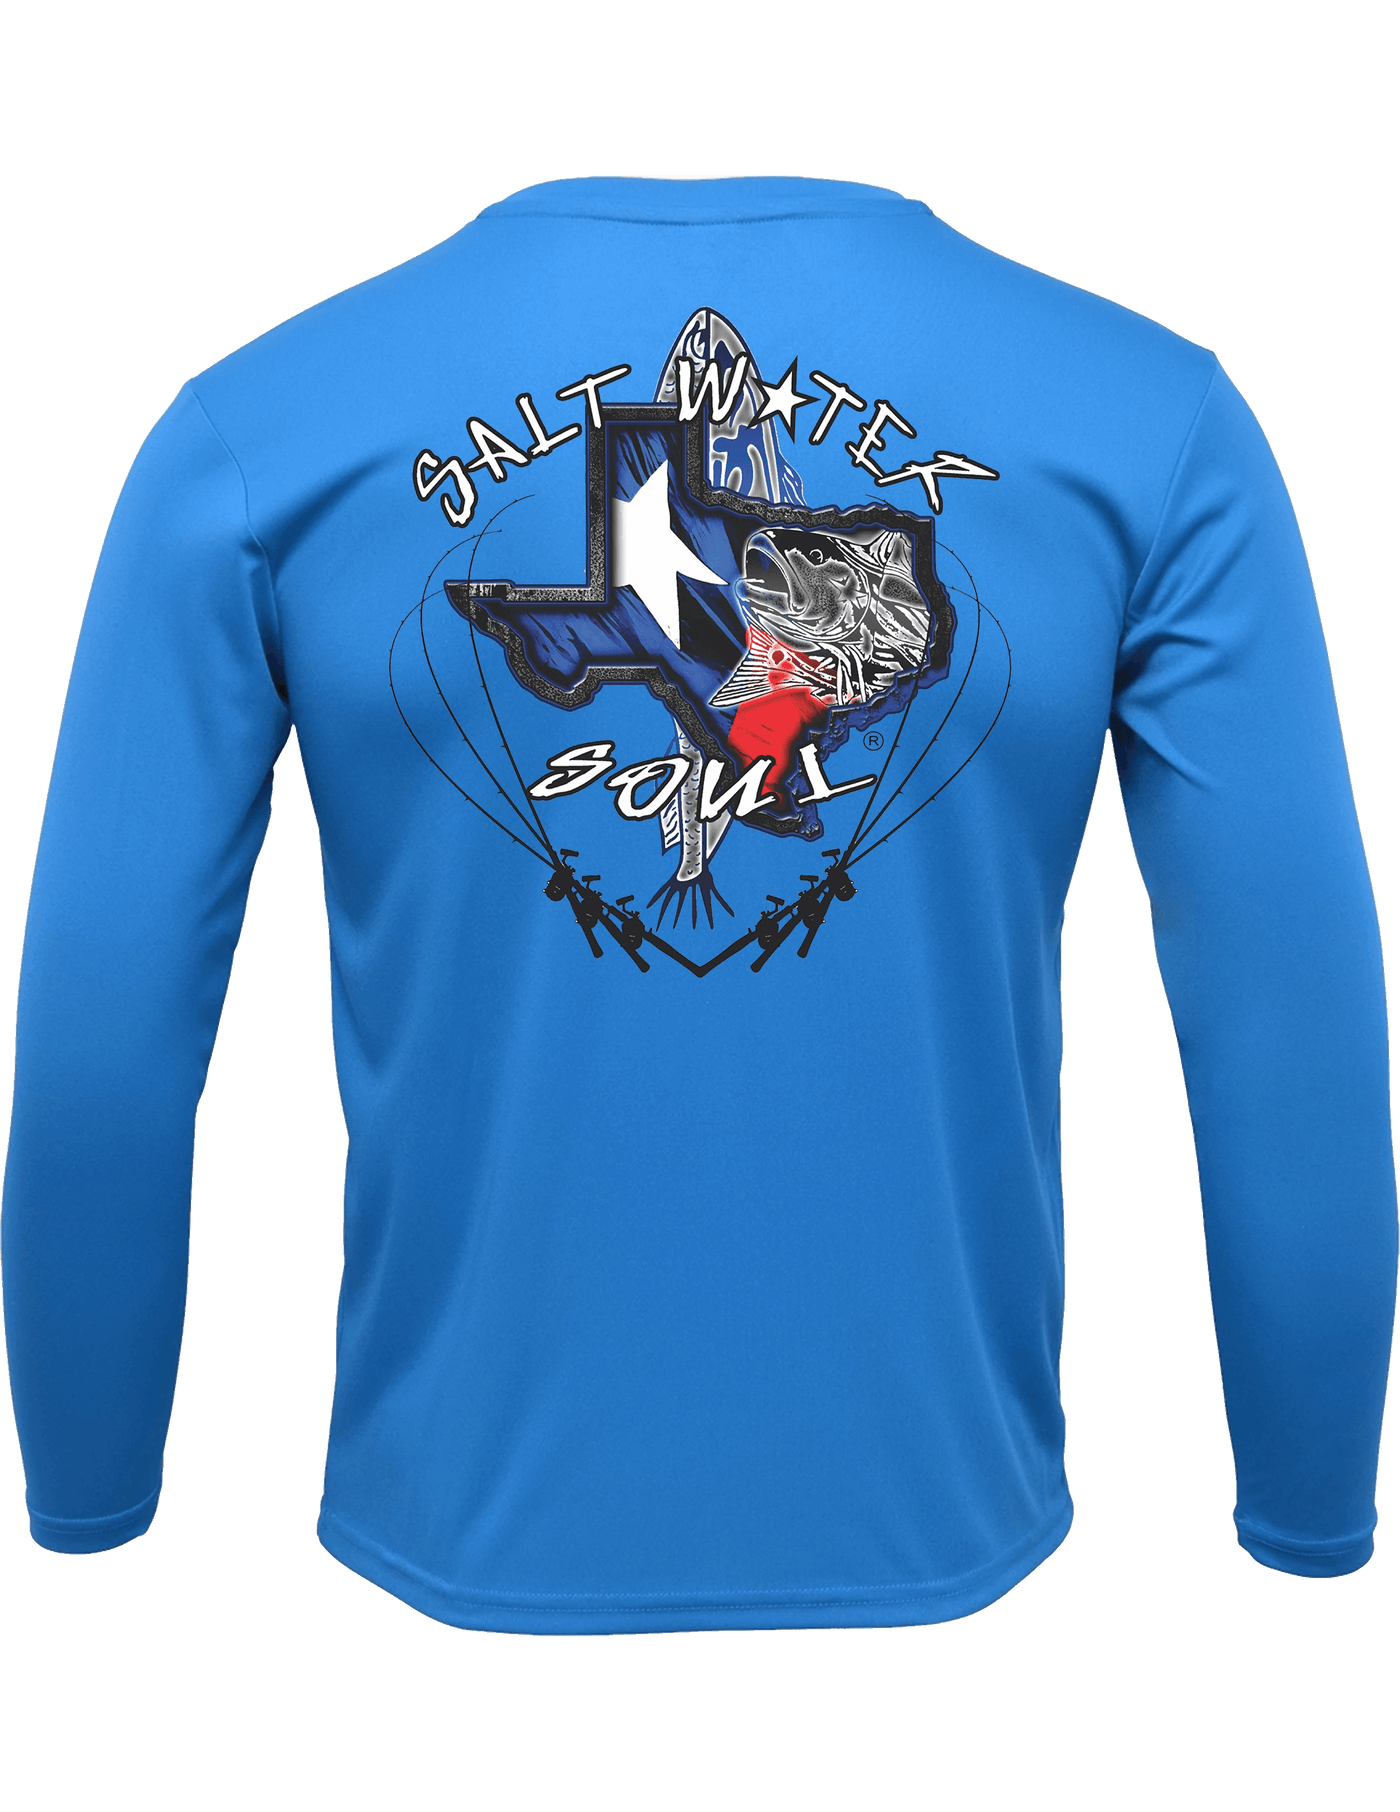 Saltwater Soul - Texas 6 Pack - Men's Performance Long-Sleeve Shirt Apparel Saltwater Soul 